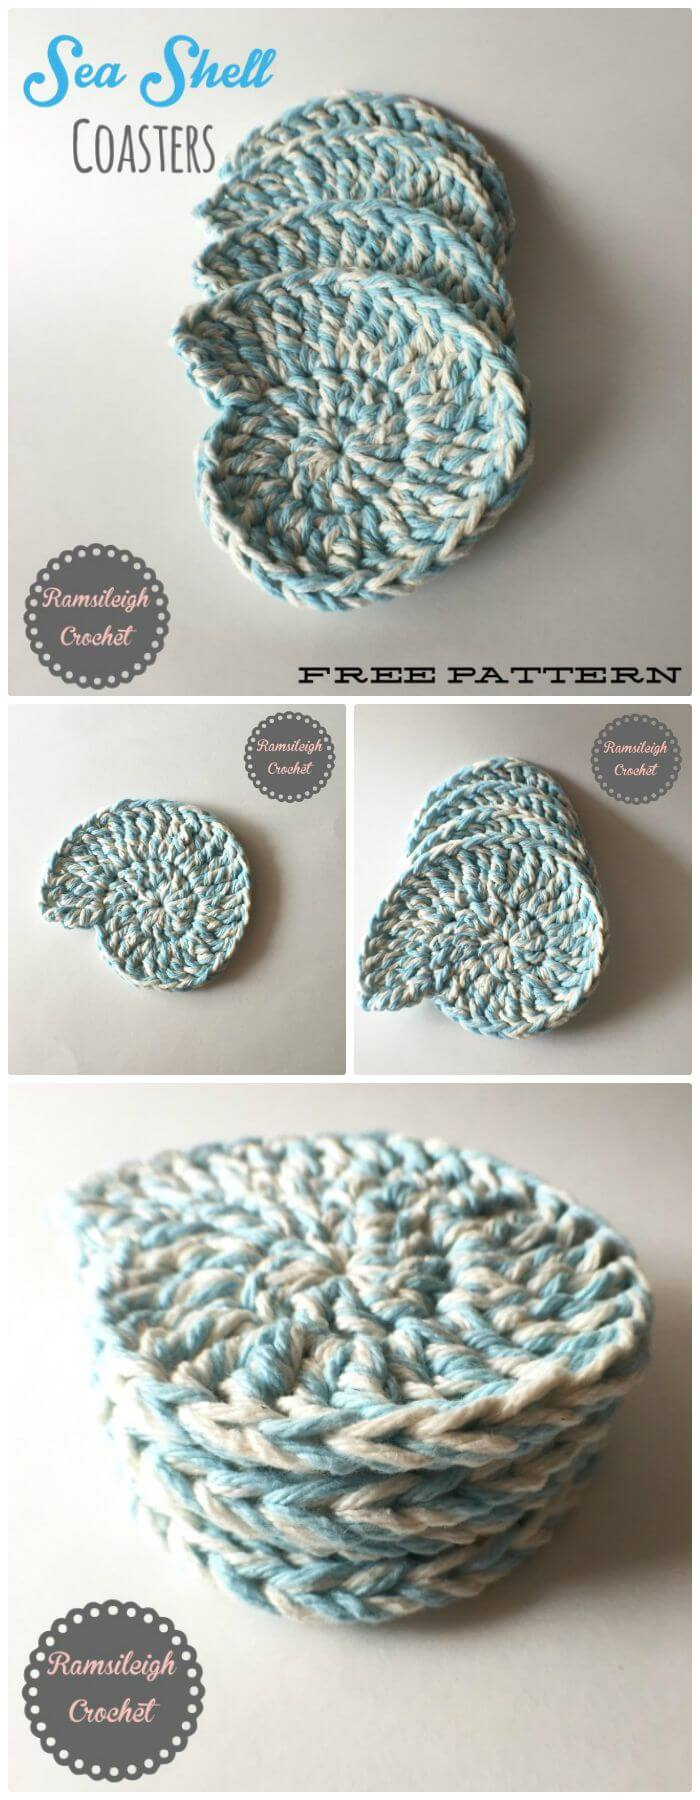 Coaster Crochet Pattern 70 Easy Free Crochet Coaster Patterns For Beginners Diy Crafts